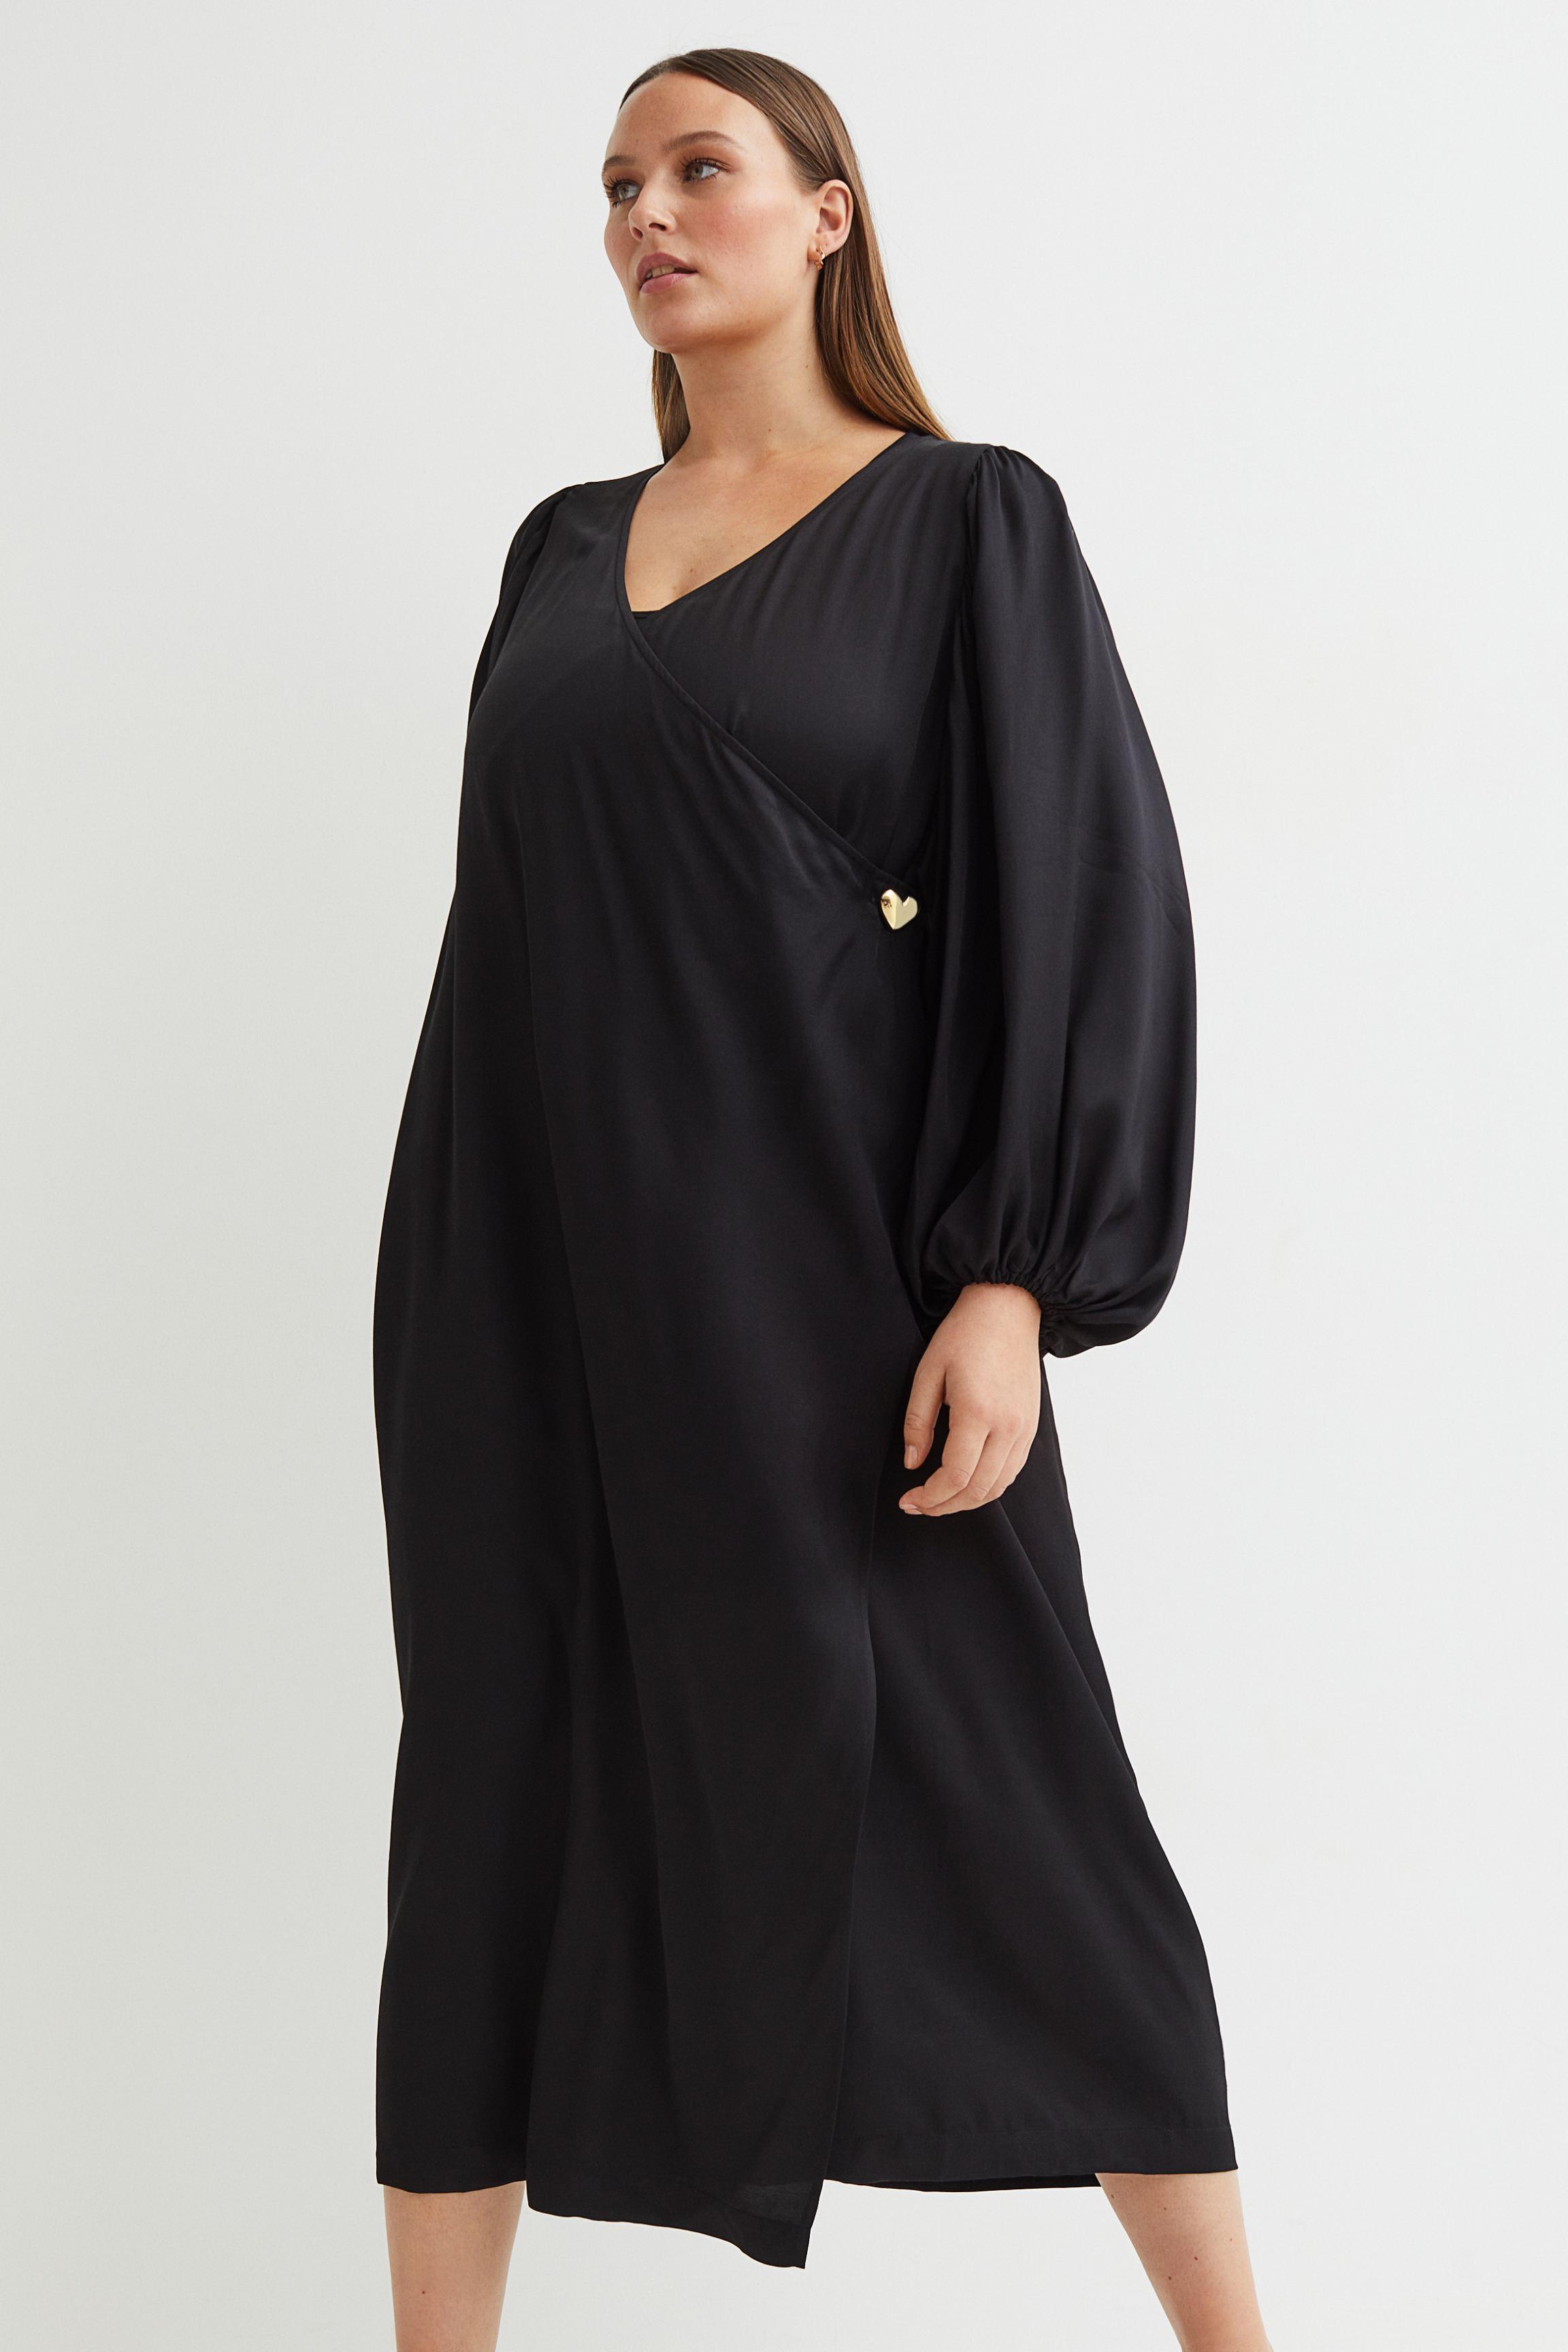 H☀M Satin Wrap Dress in Black - Lyst